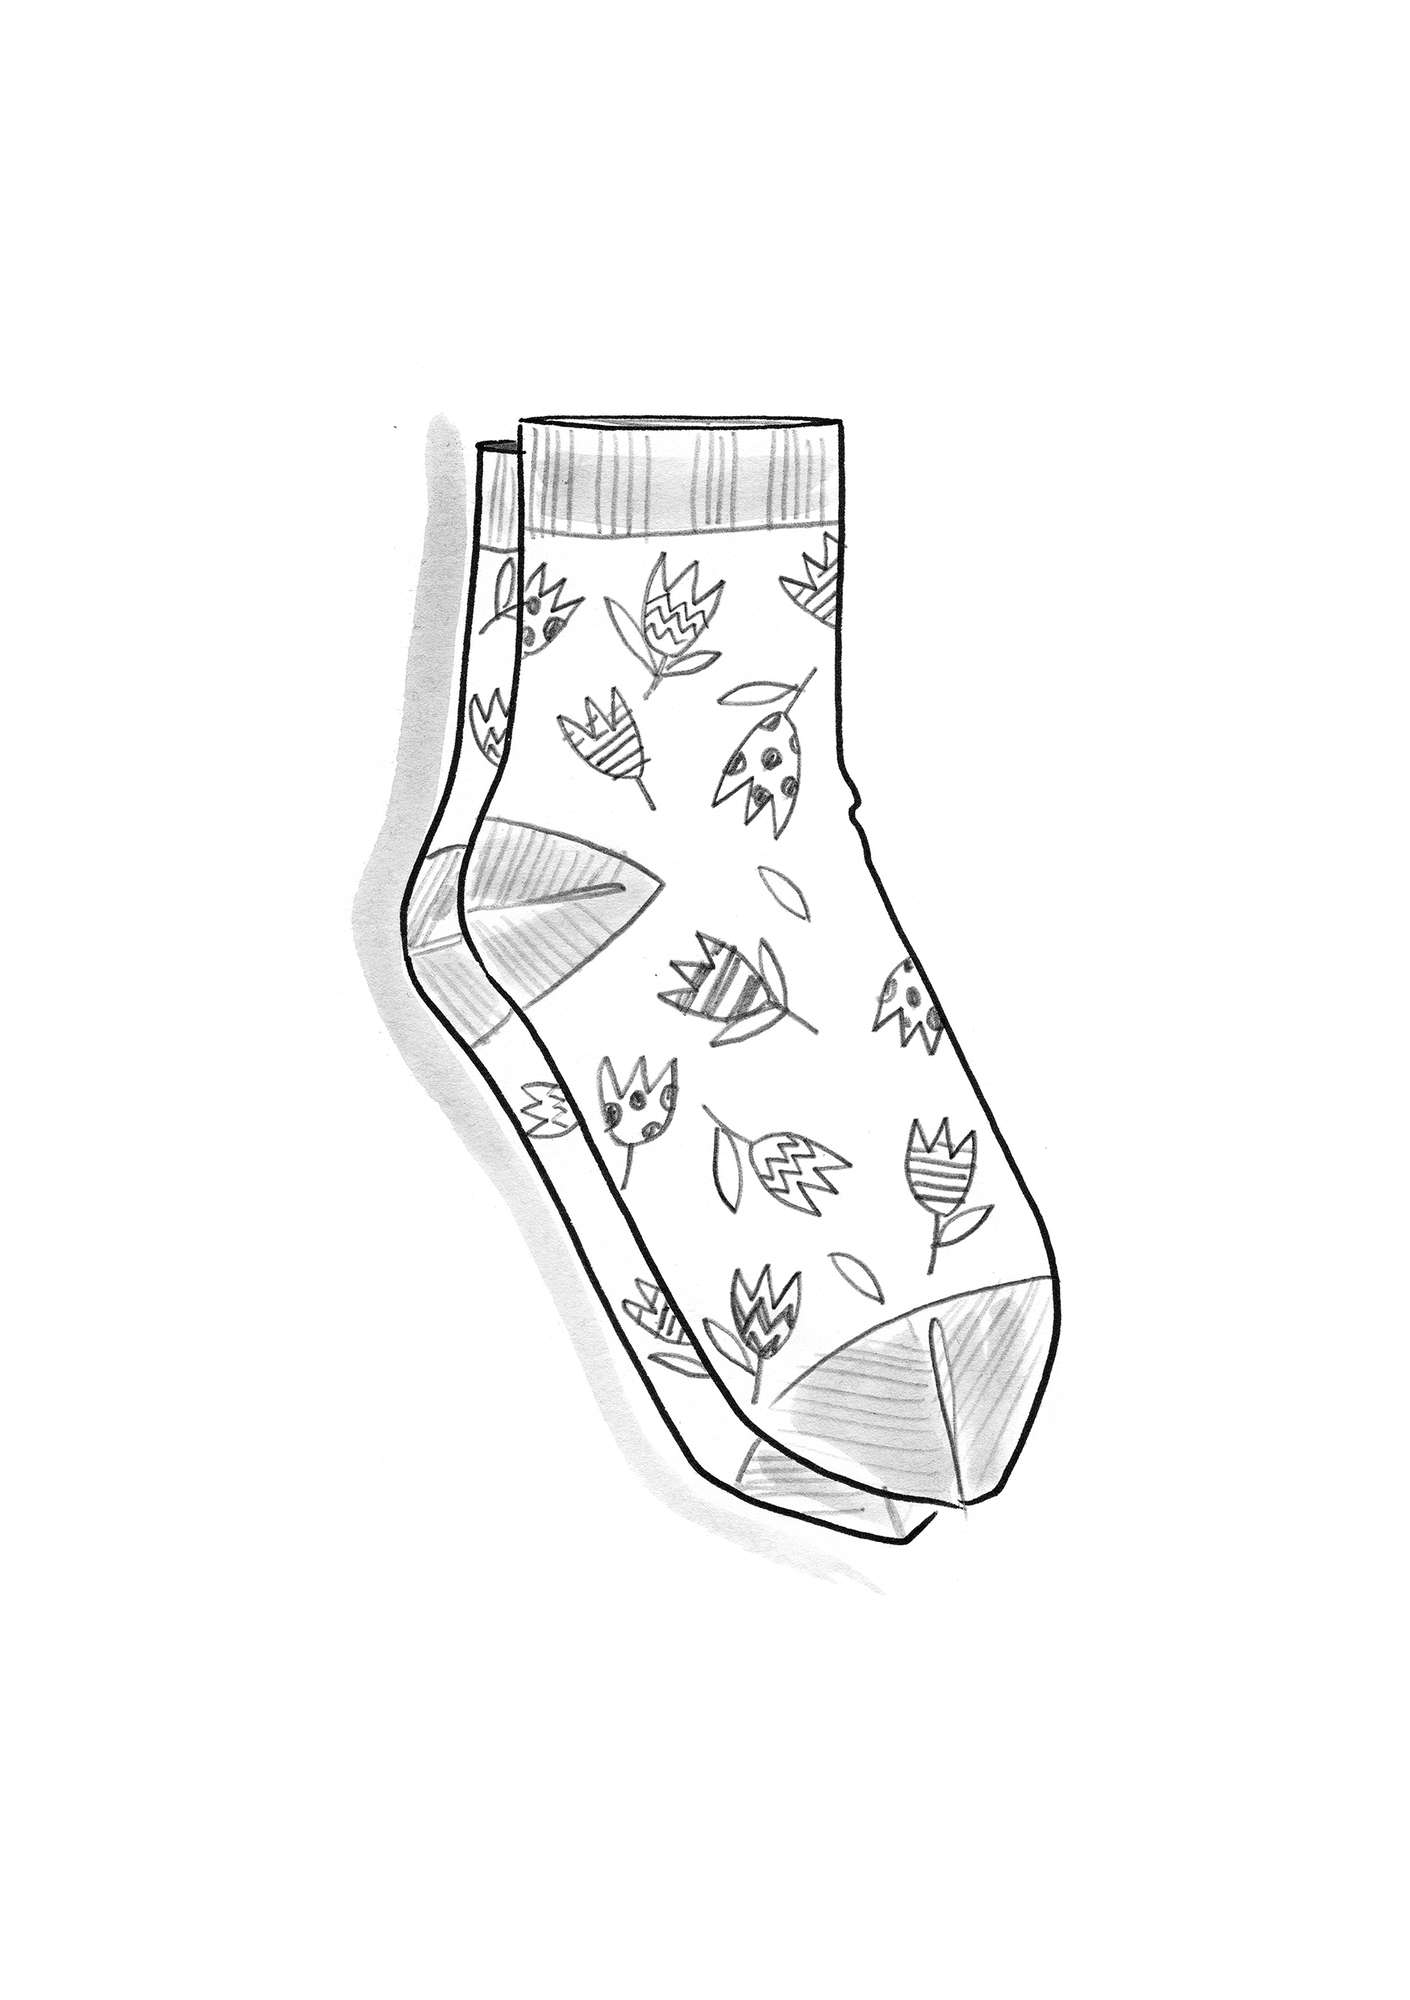 “Evelyn” organic cotton socks kiwi